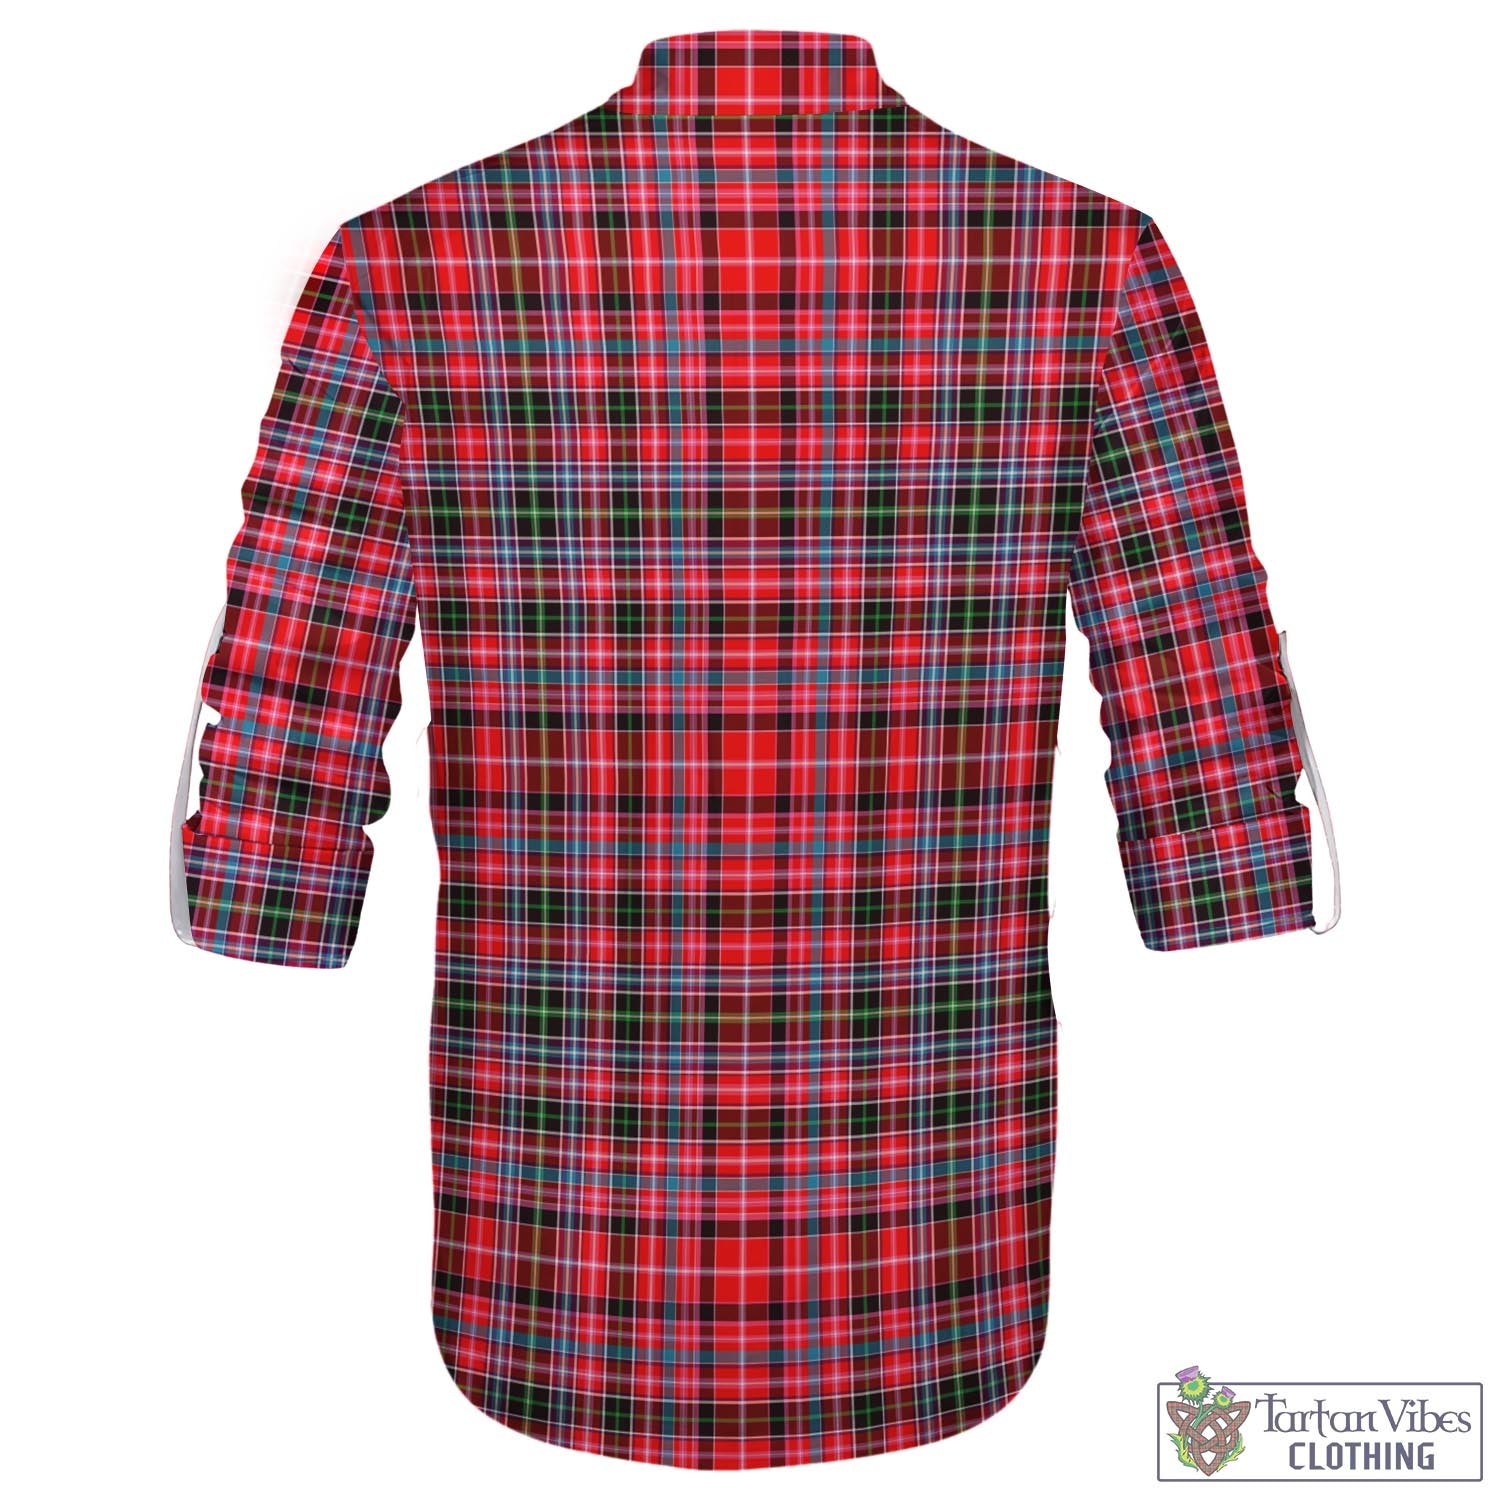 Tartan Vibes Clothing Udny Tartan Men's Scottish Traditional Jacobite Ghillie Kilt Shirt